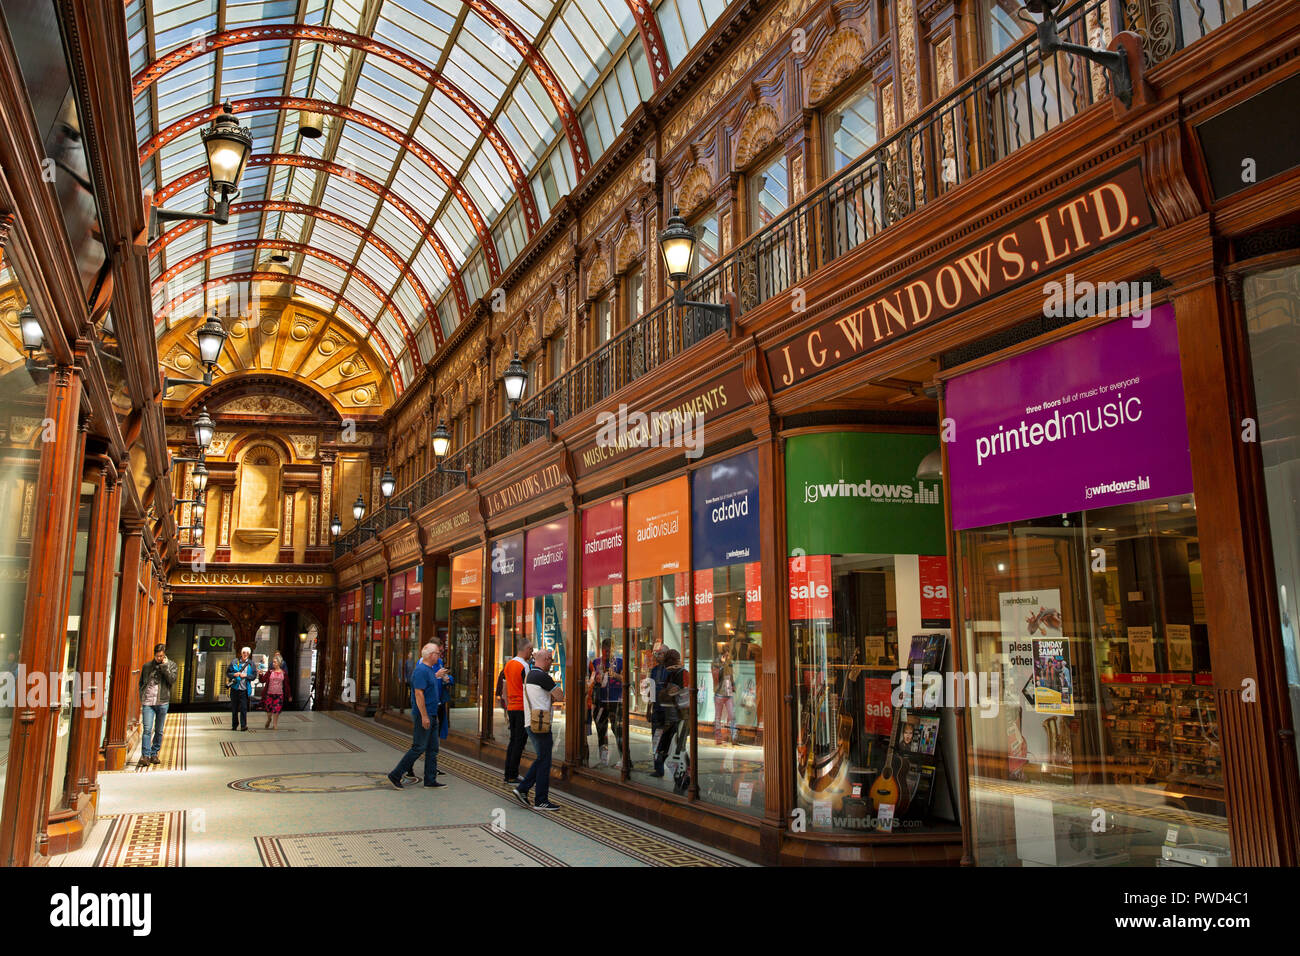 UK, England, Tyneside, Newcastle upon Tyne, Central Arcade, Windows Music Shop Stock Photo